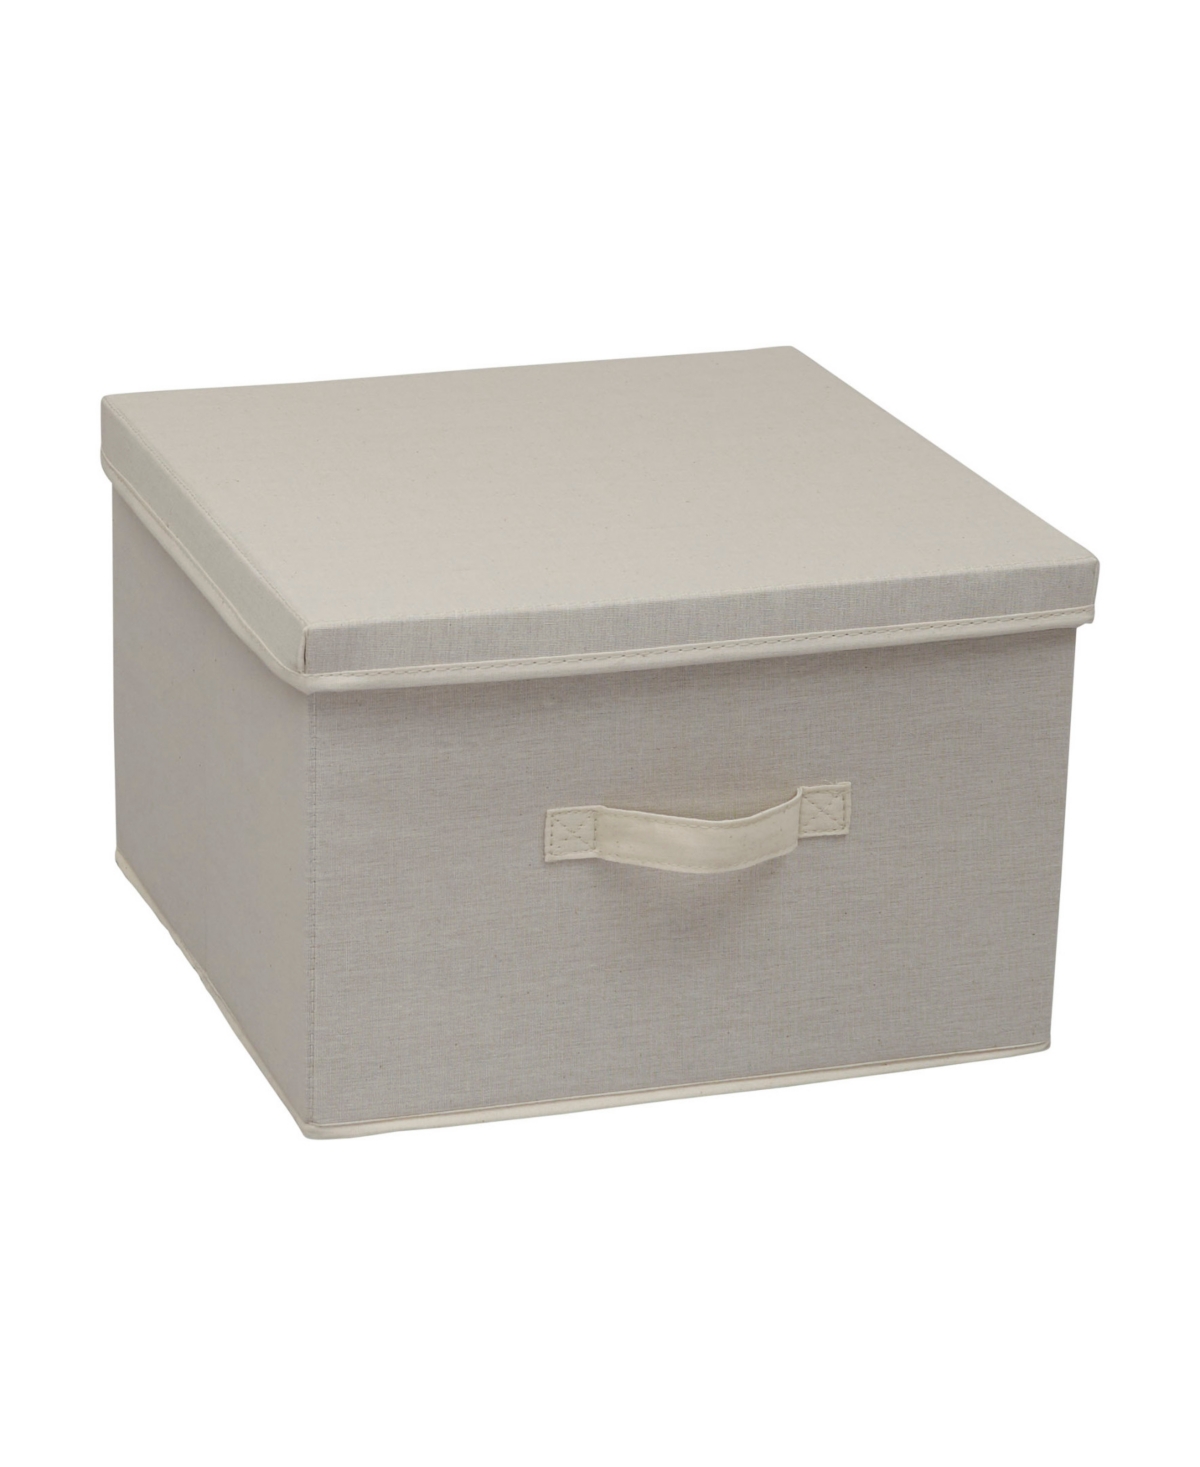 Square Storage Box With Lid - Cream